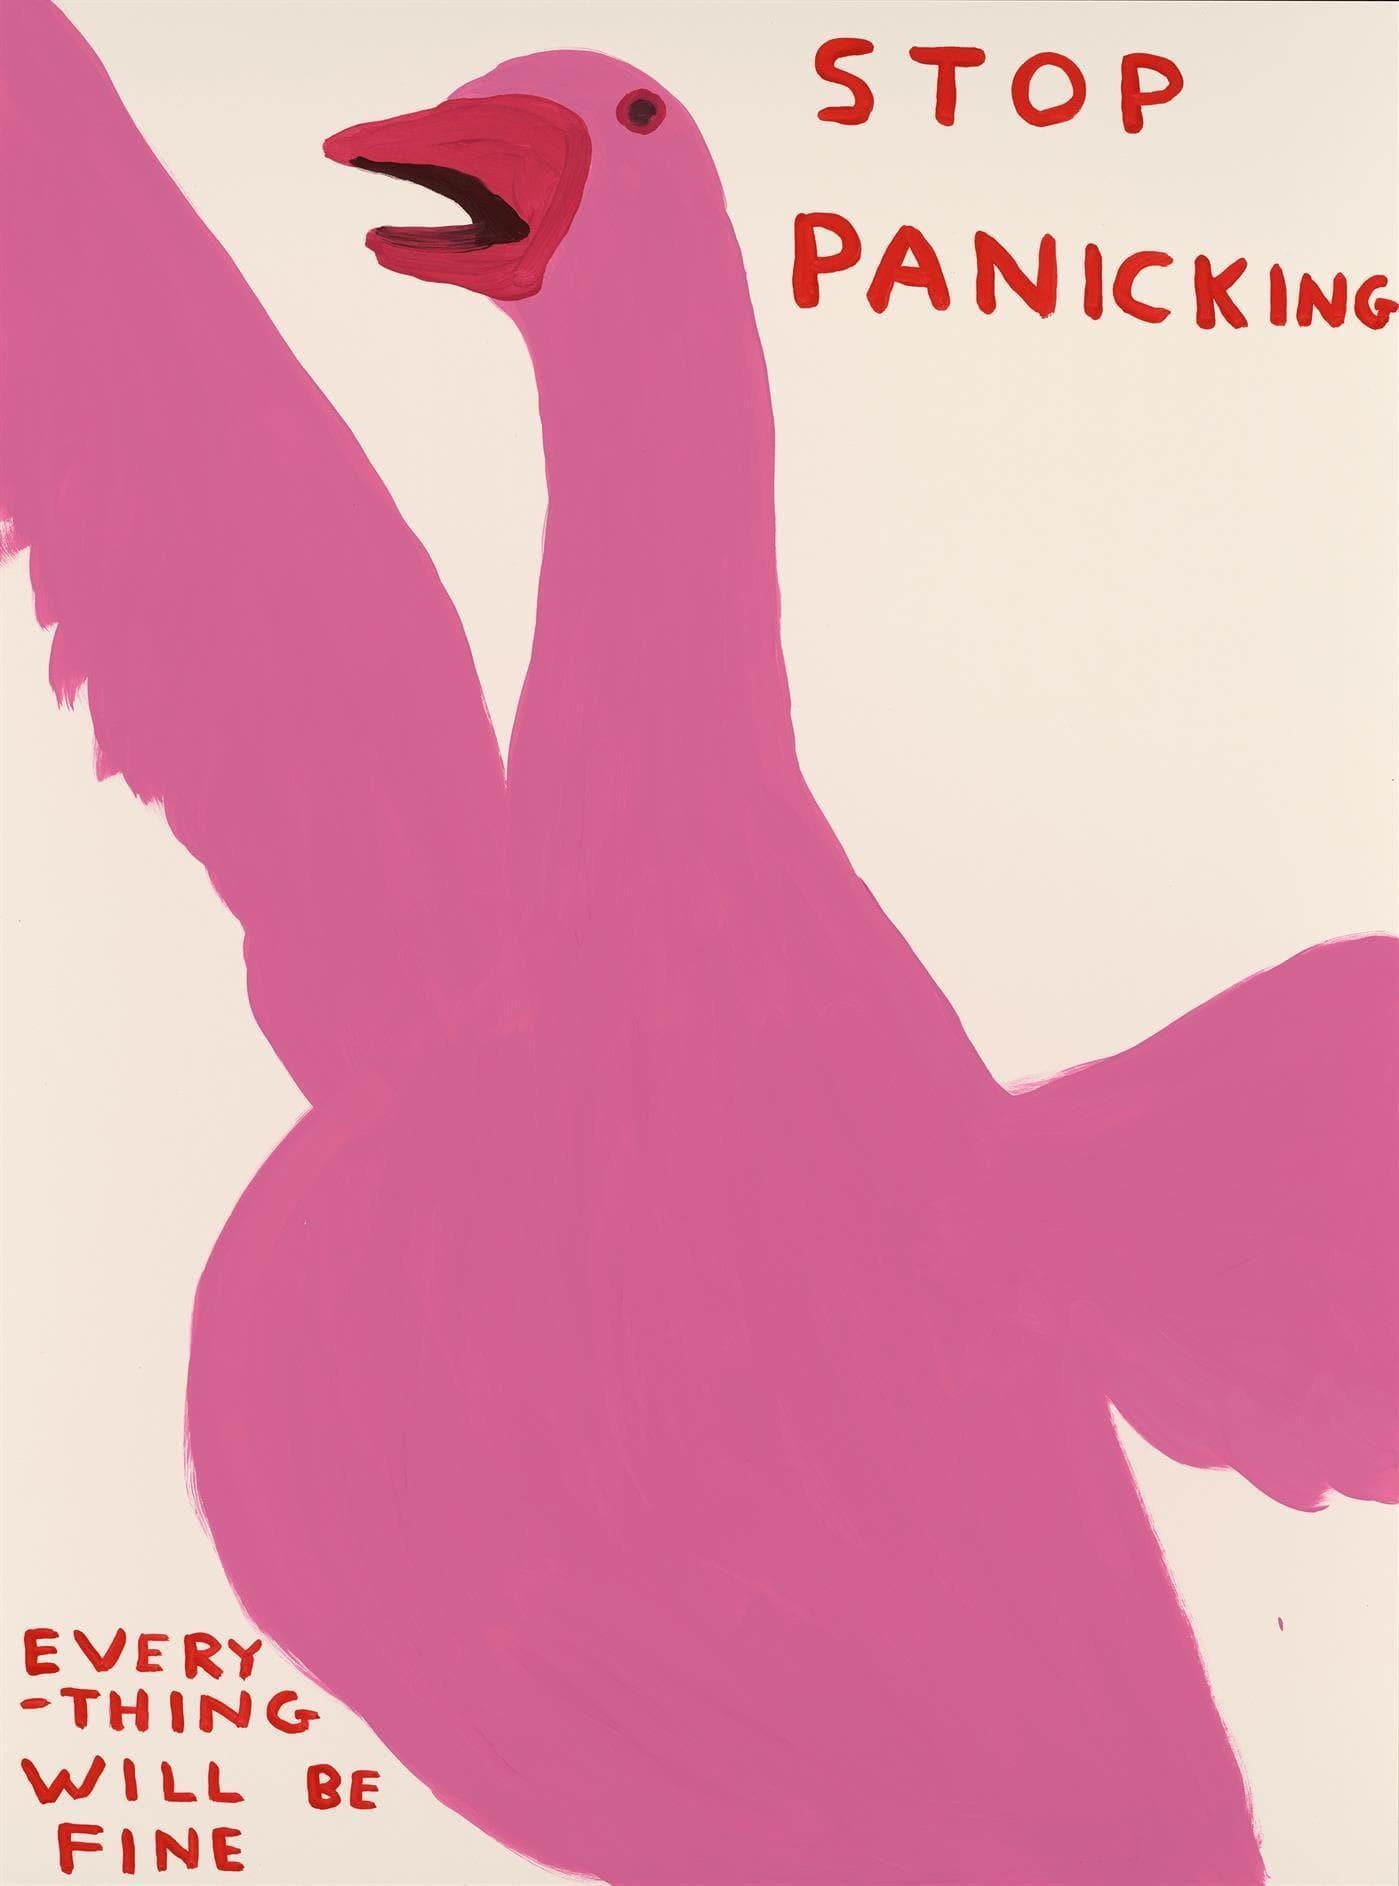 David Shrigley Animal Print - Stop Panicking